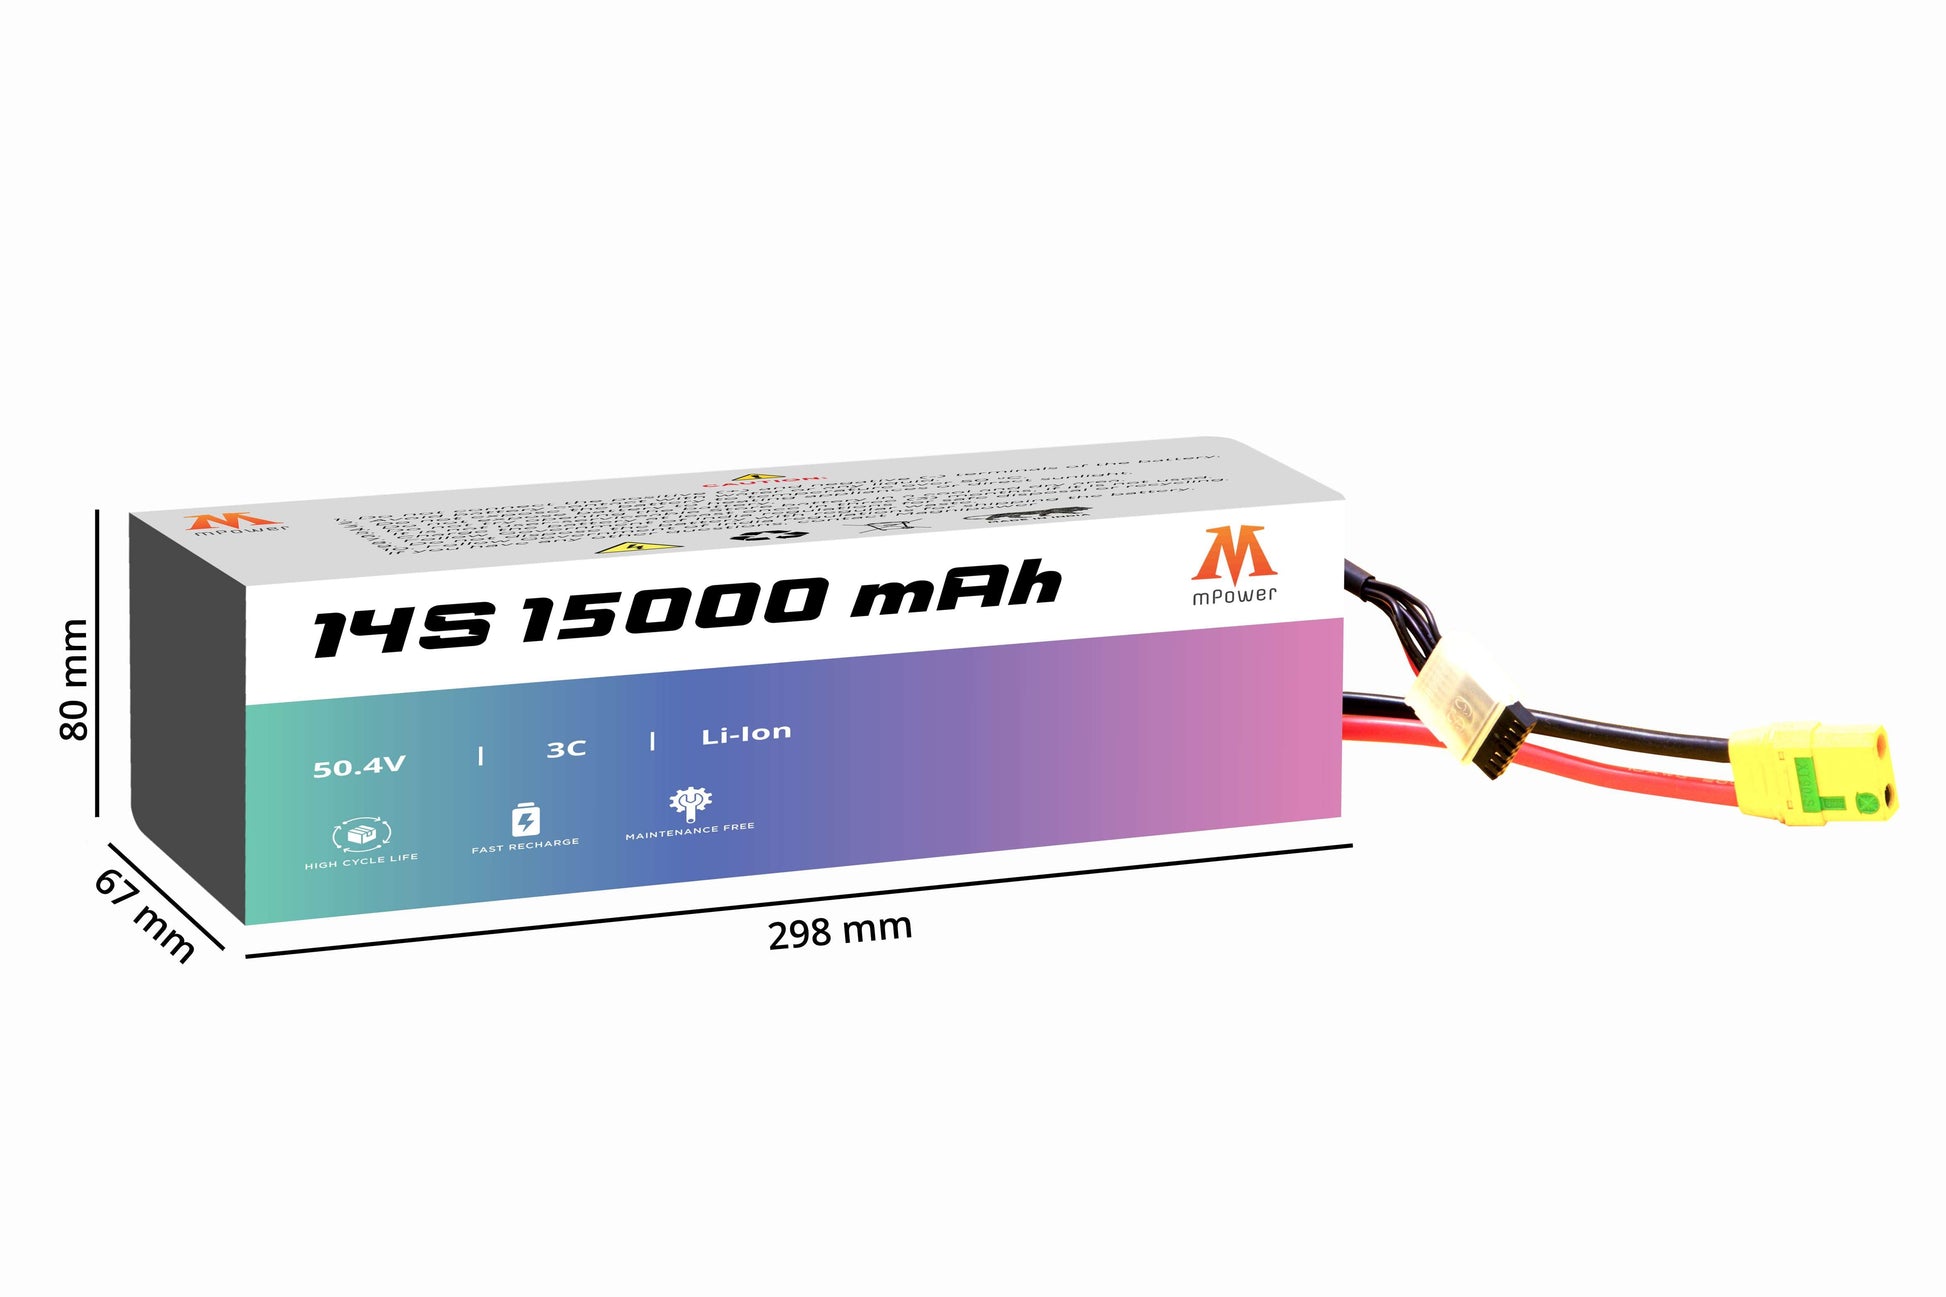 mPower 14S 15000mAh Lithium-Ion Battery for Surveillance Drones-mpowerlithium